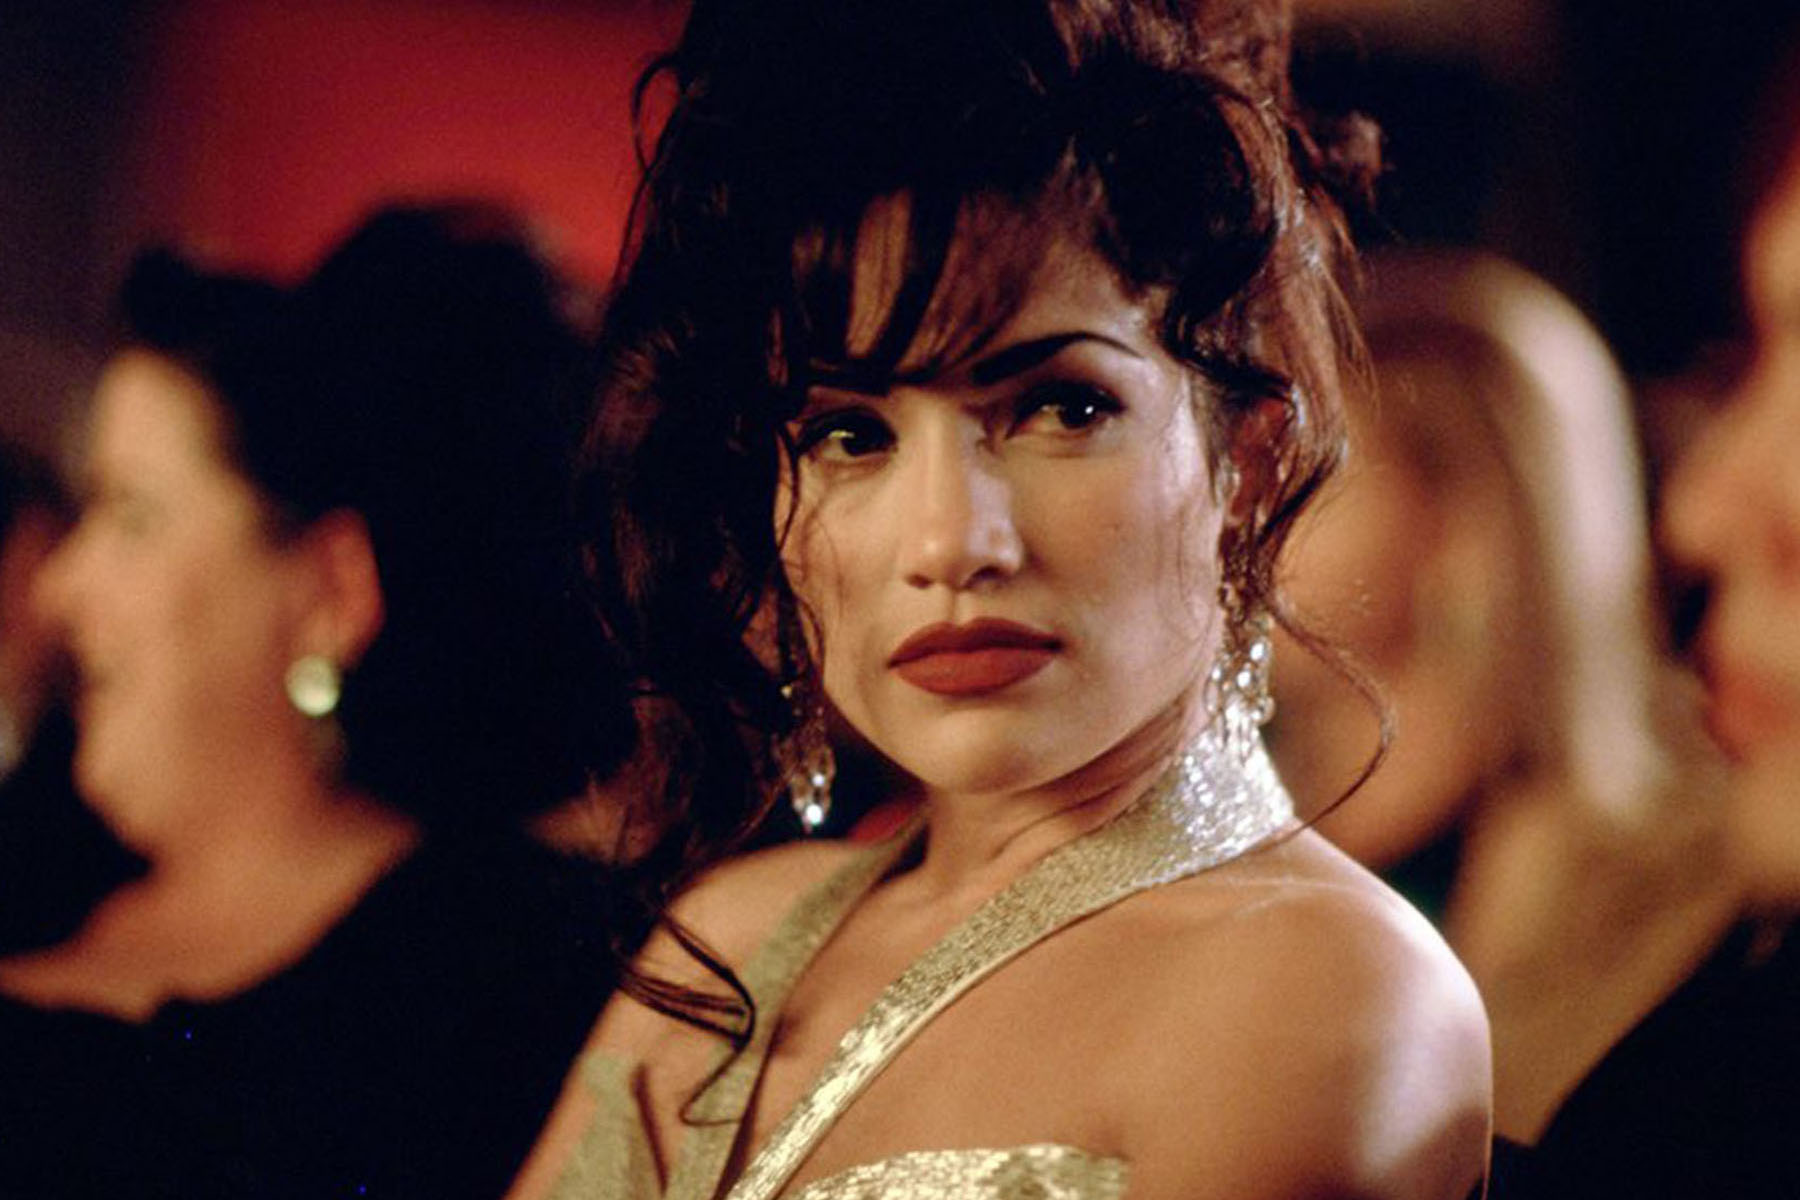 Jennifer Lopez as Selena Quintanilla in "Selena" (1997)